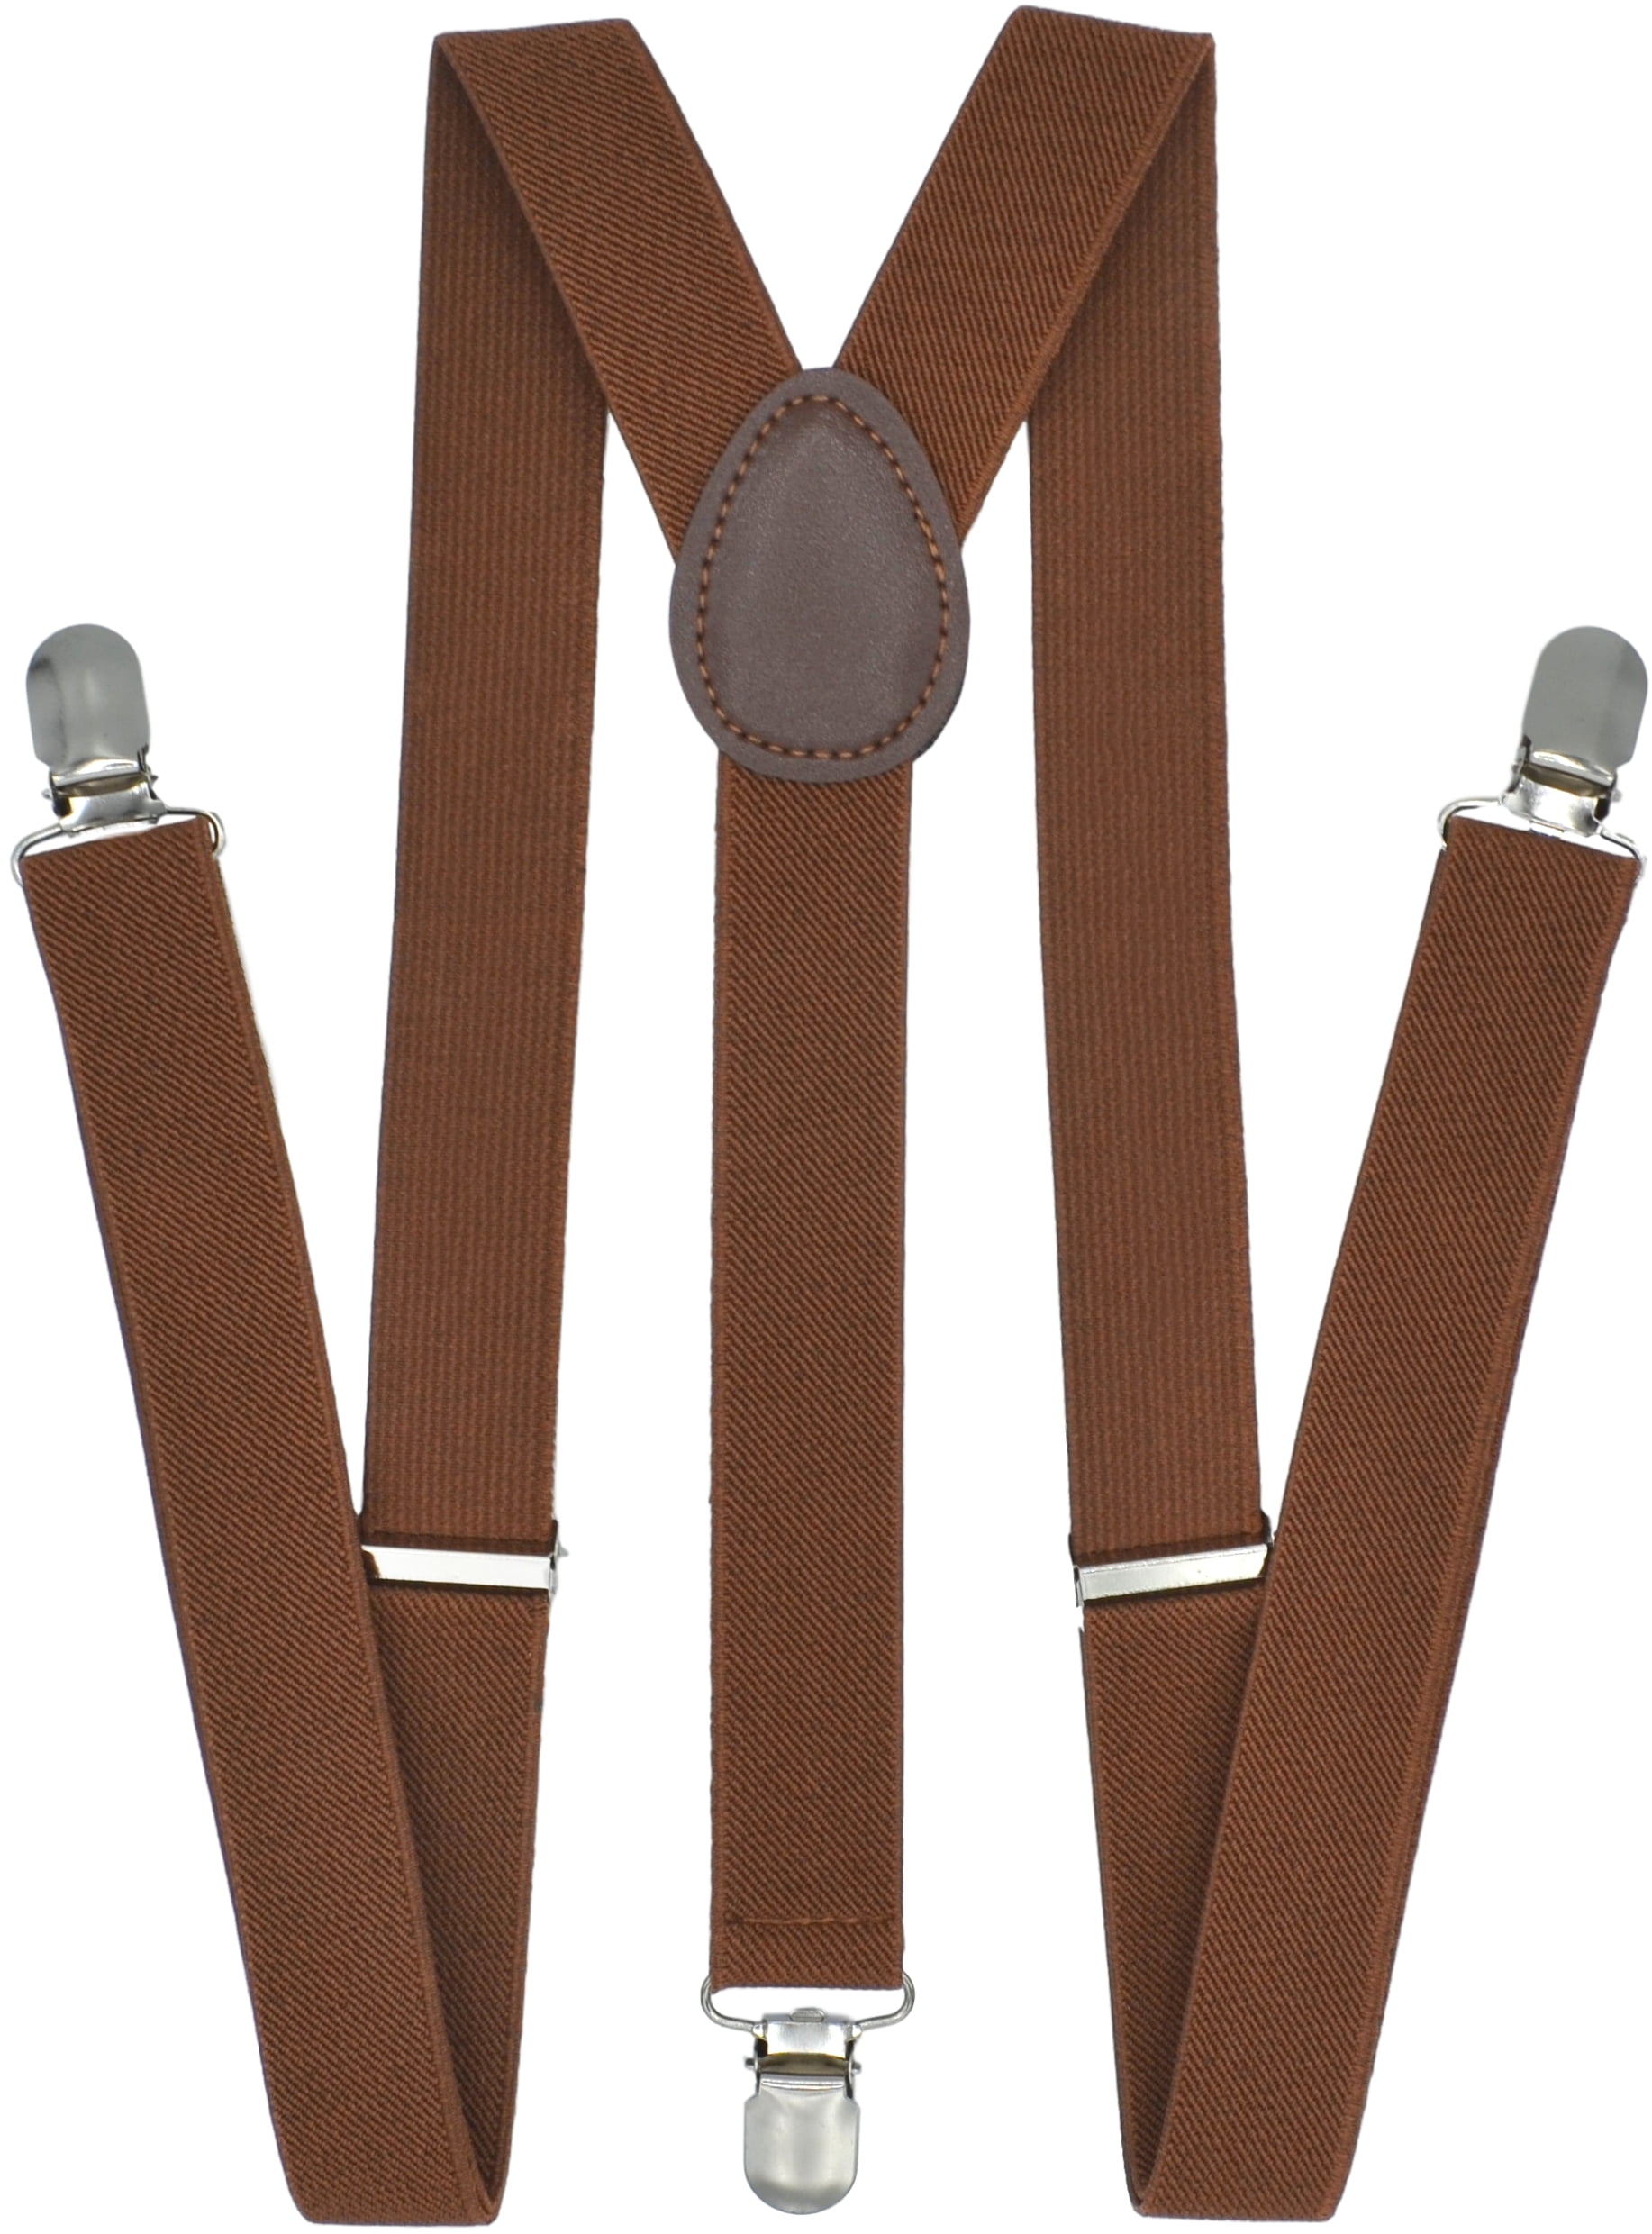 Suspenders for men tuxedo,tuxedo suspenders for men,tux suspenders  cummerbund Heavy Duty Leather men's suspenders